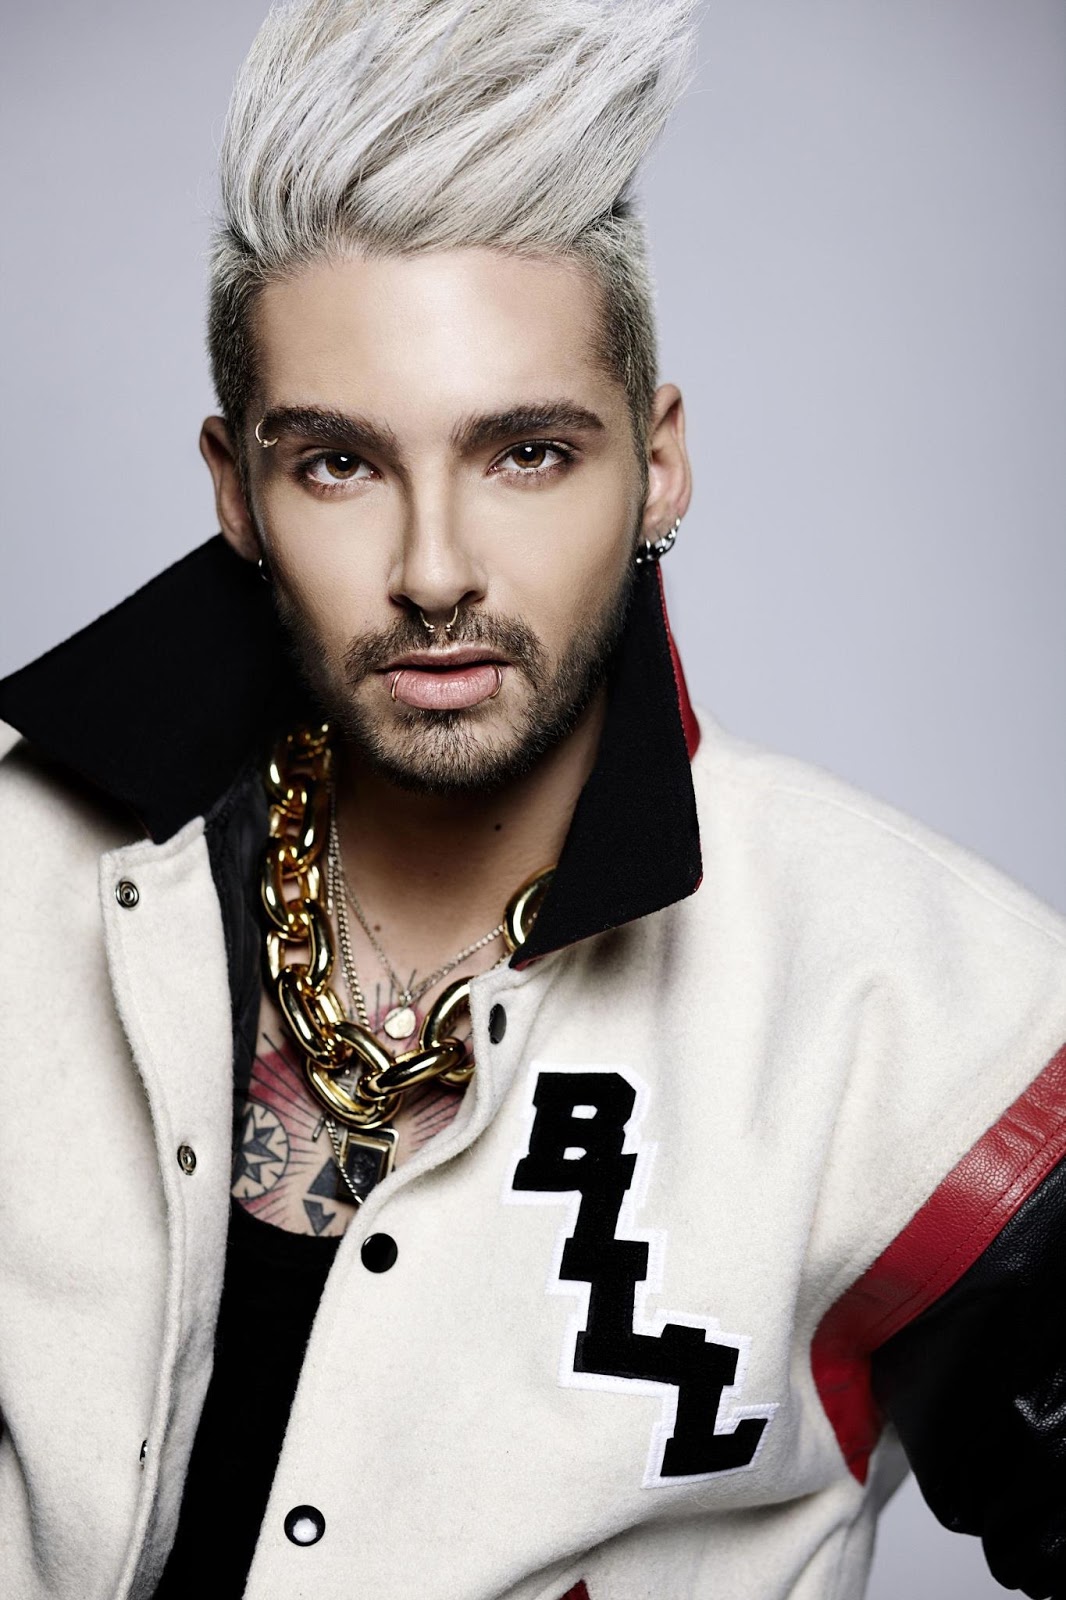 Tokio Hotel: Bill Kaulitz fa coming out in una bellissima lettera - bill kaulitz tokio hotel 2 - Gay.it